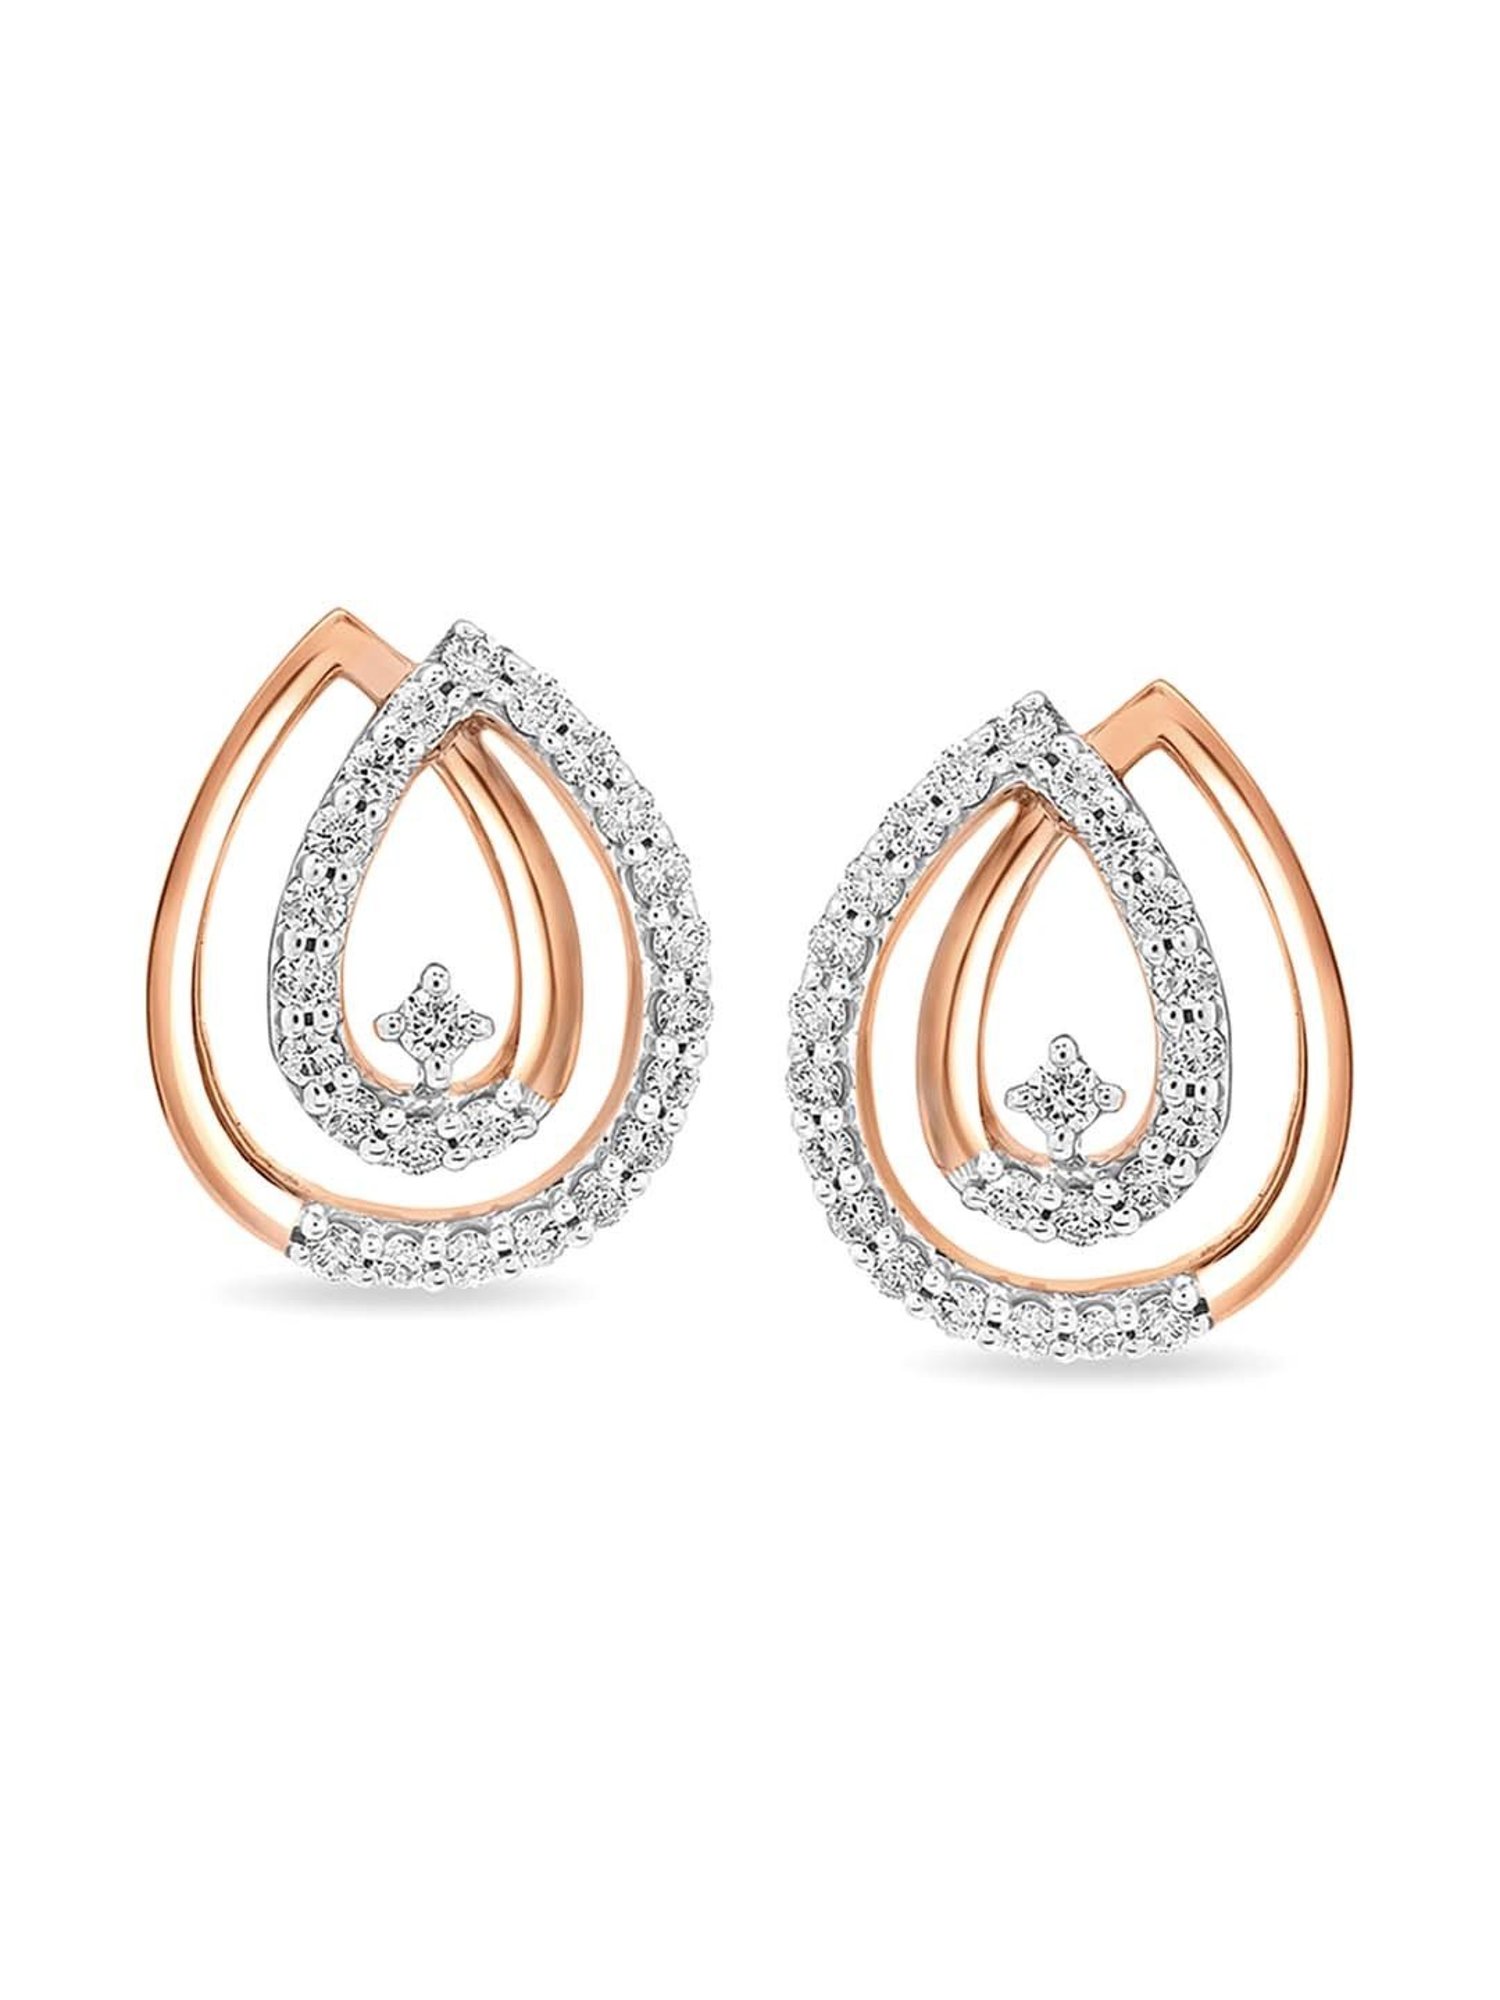 Buy quality Dainty Diamond Stud Earrings in 14k Rose Gold in Pune